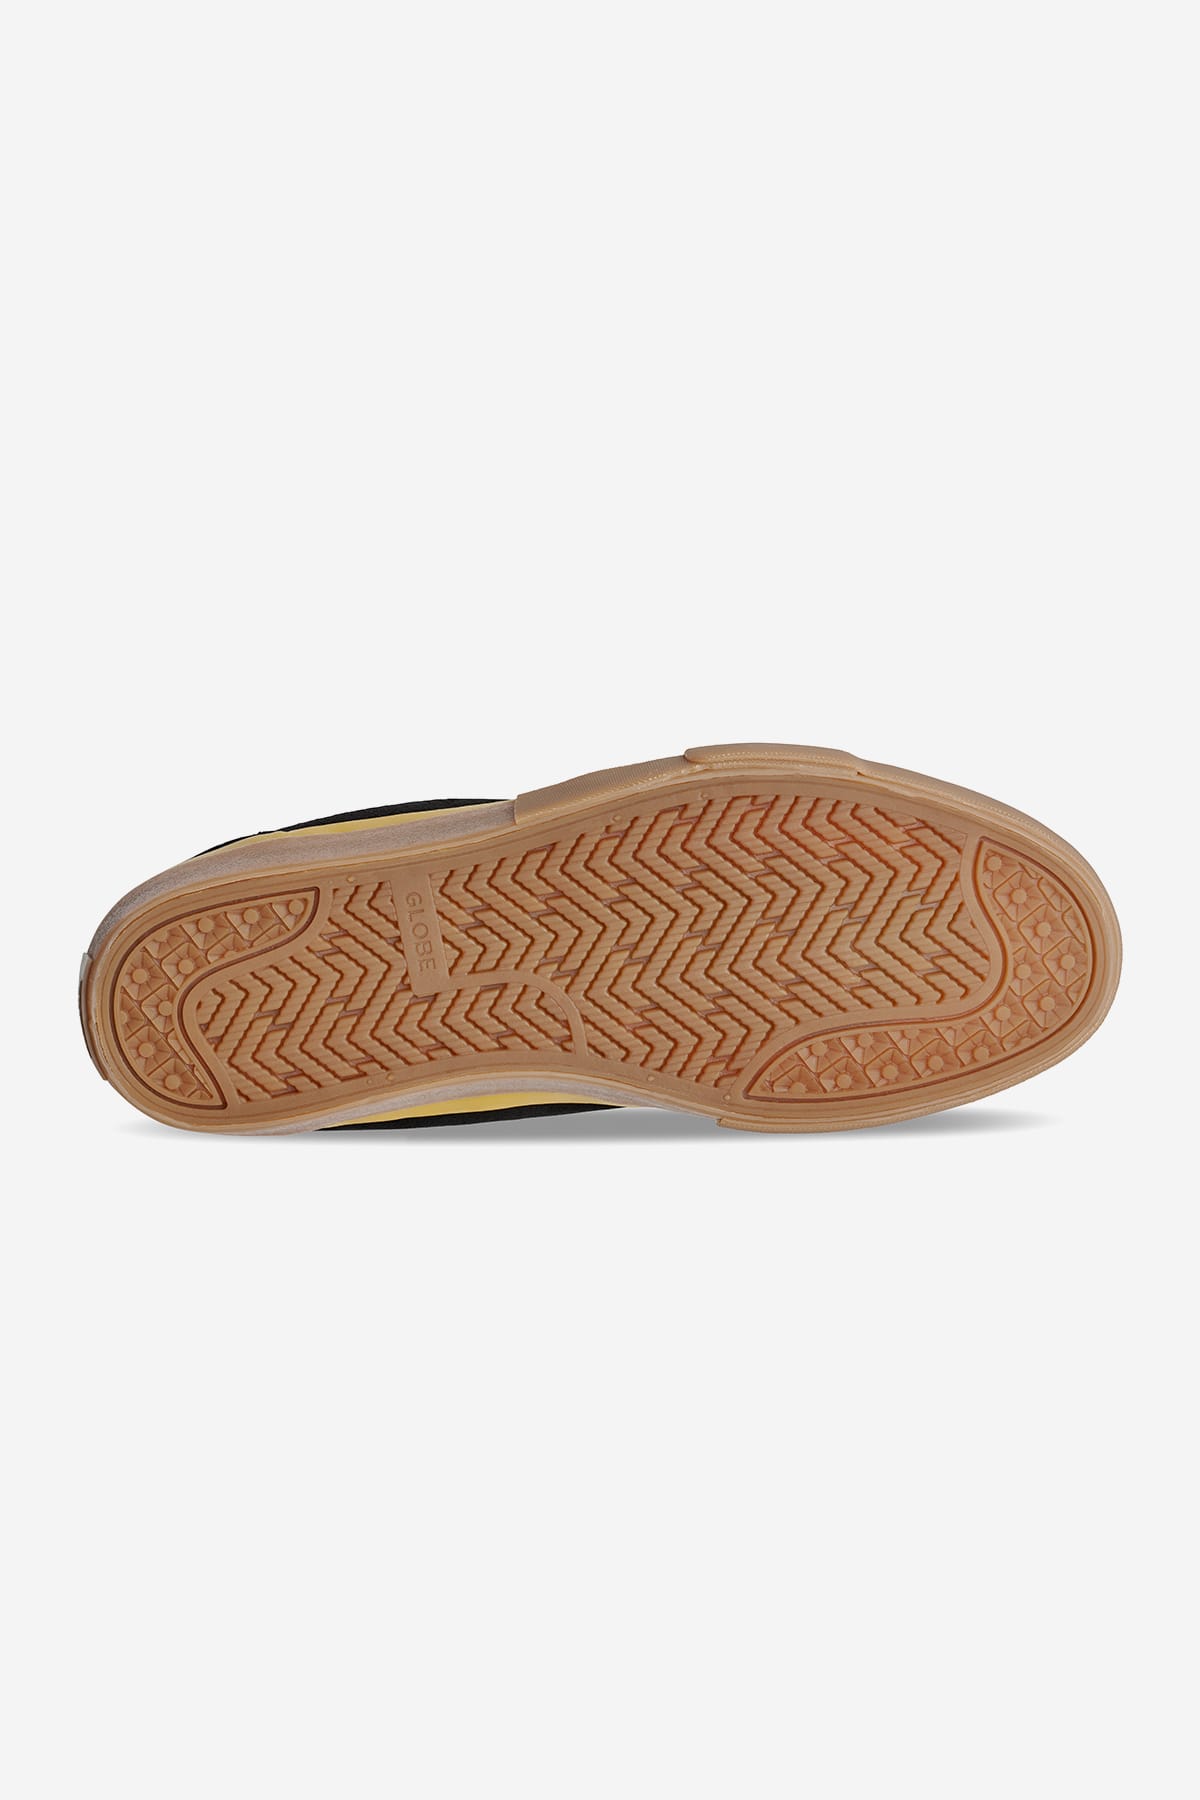 Globe - Mahalo Plus - Nero/Mustard - skateboard Scarpe